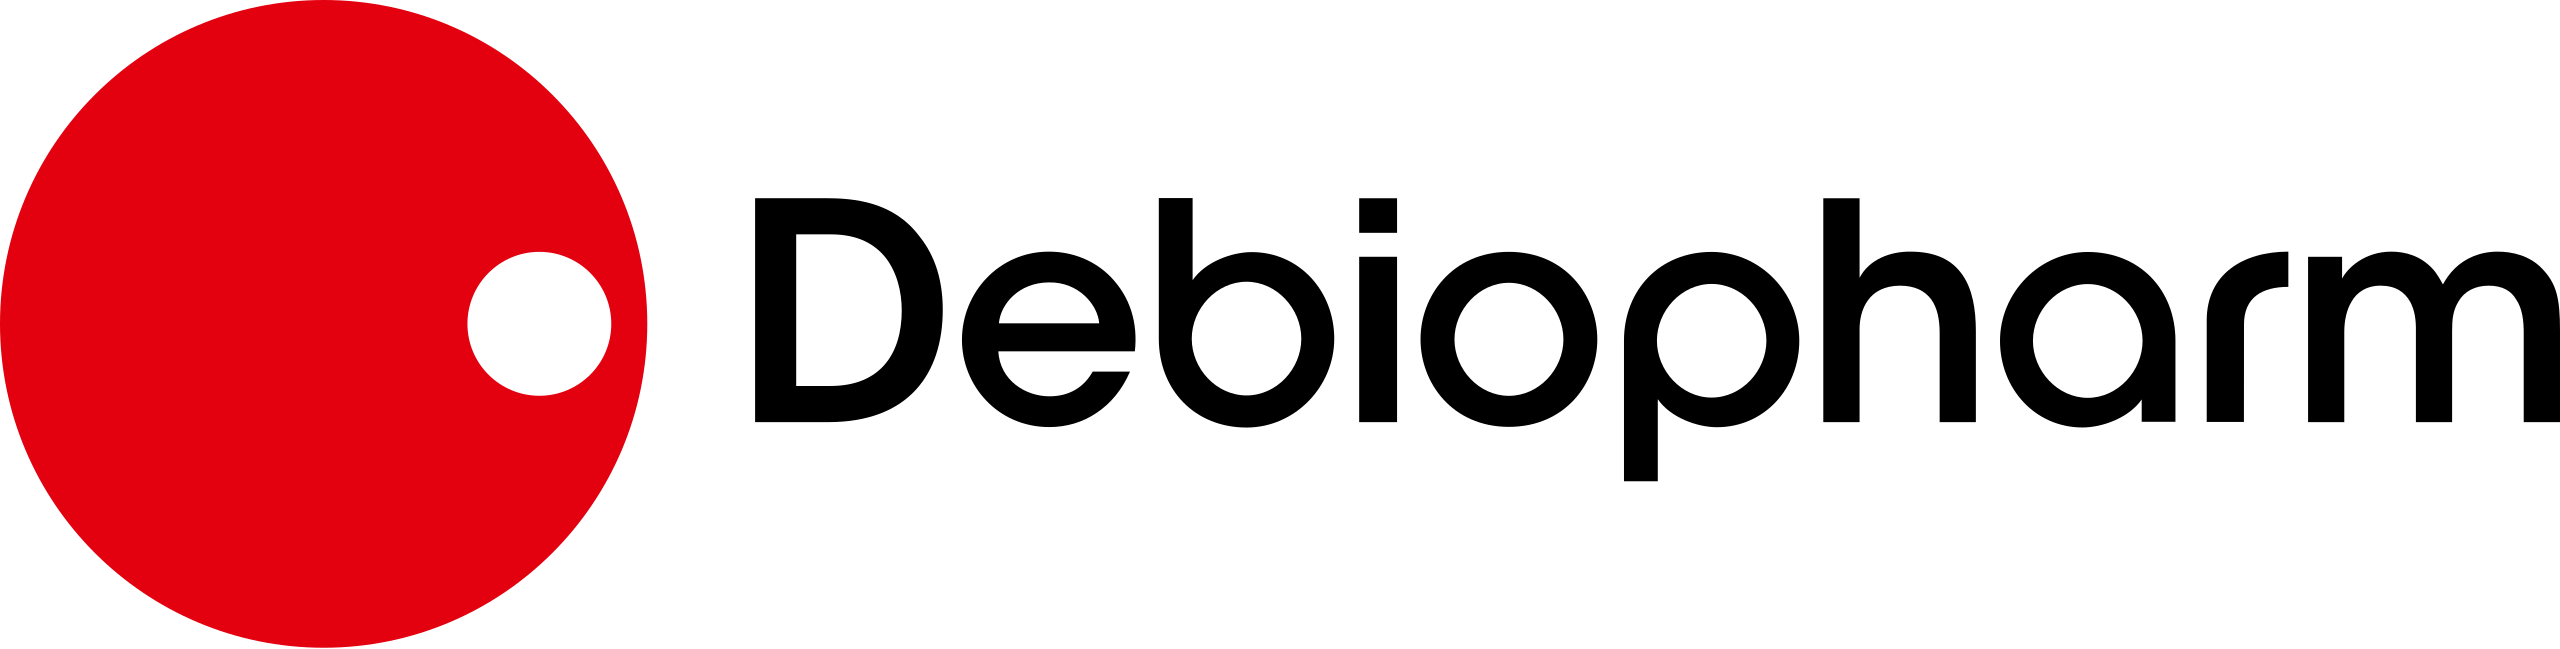 Debiopharm_Logo.svg